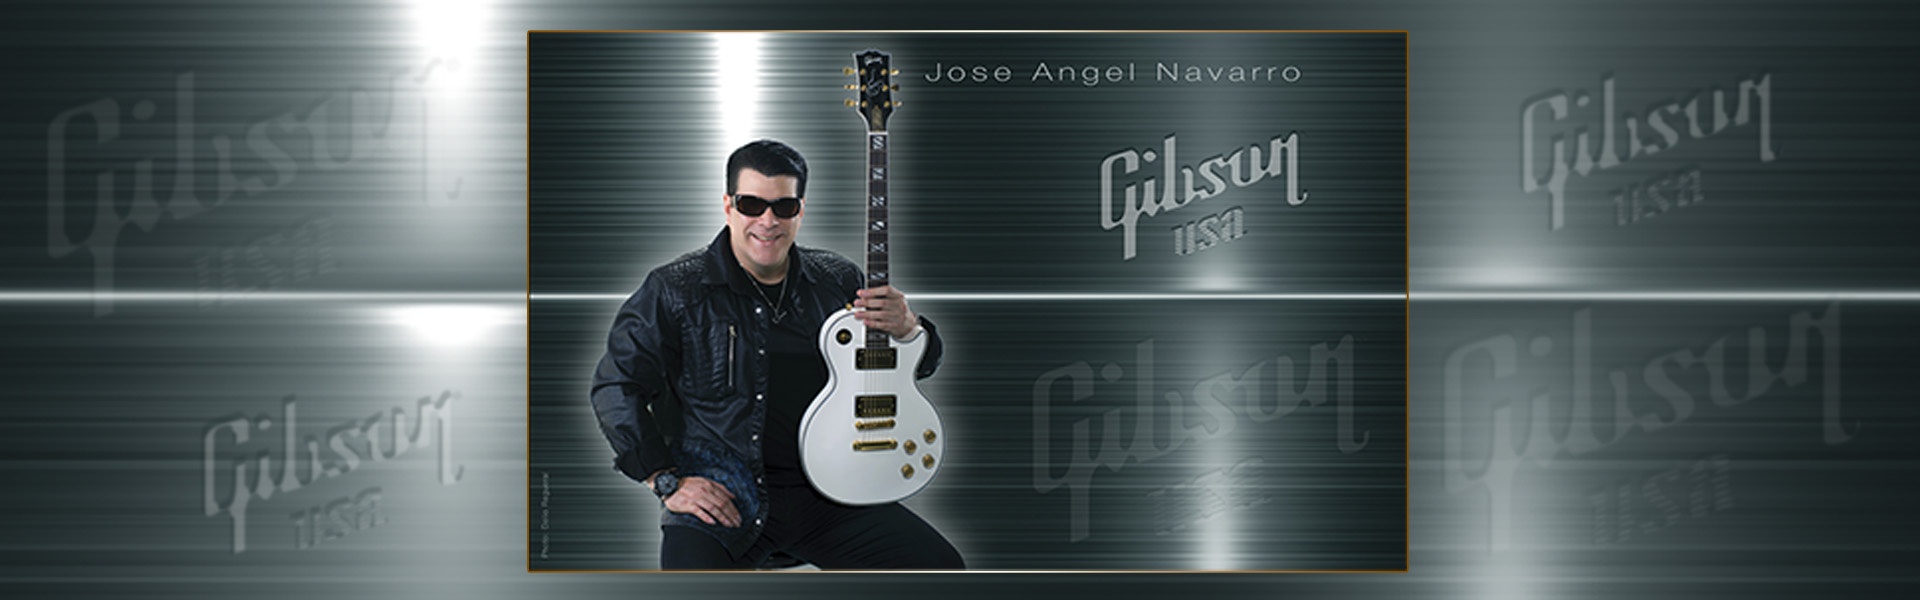 Jose Angel Navarro is using Gibson as his favorite guitar brand